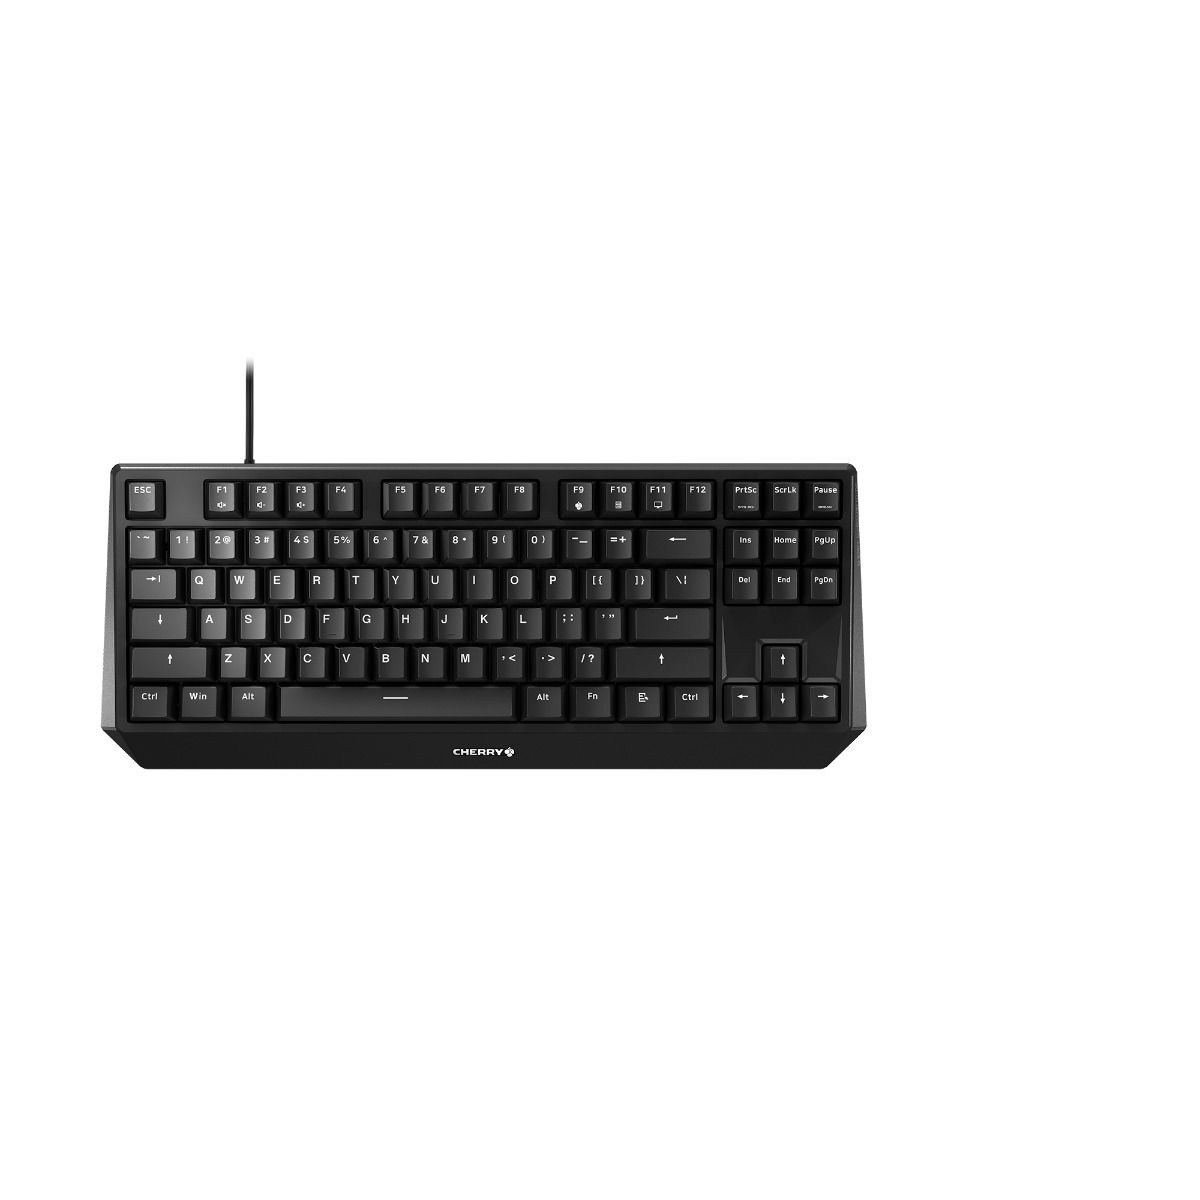  G80-3814 S Tkl RGB Keyboard (EU)